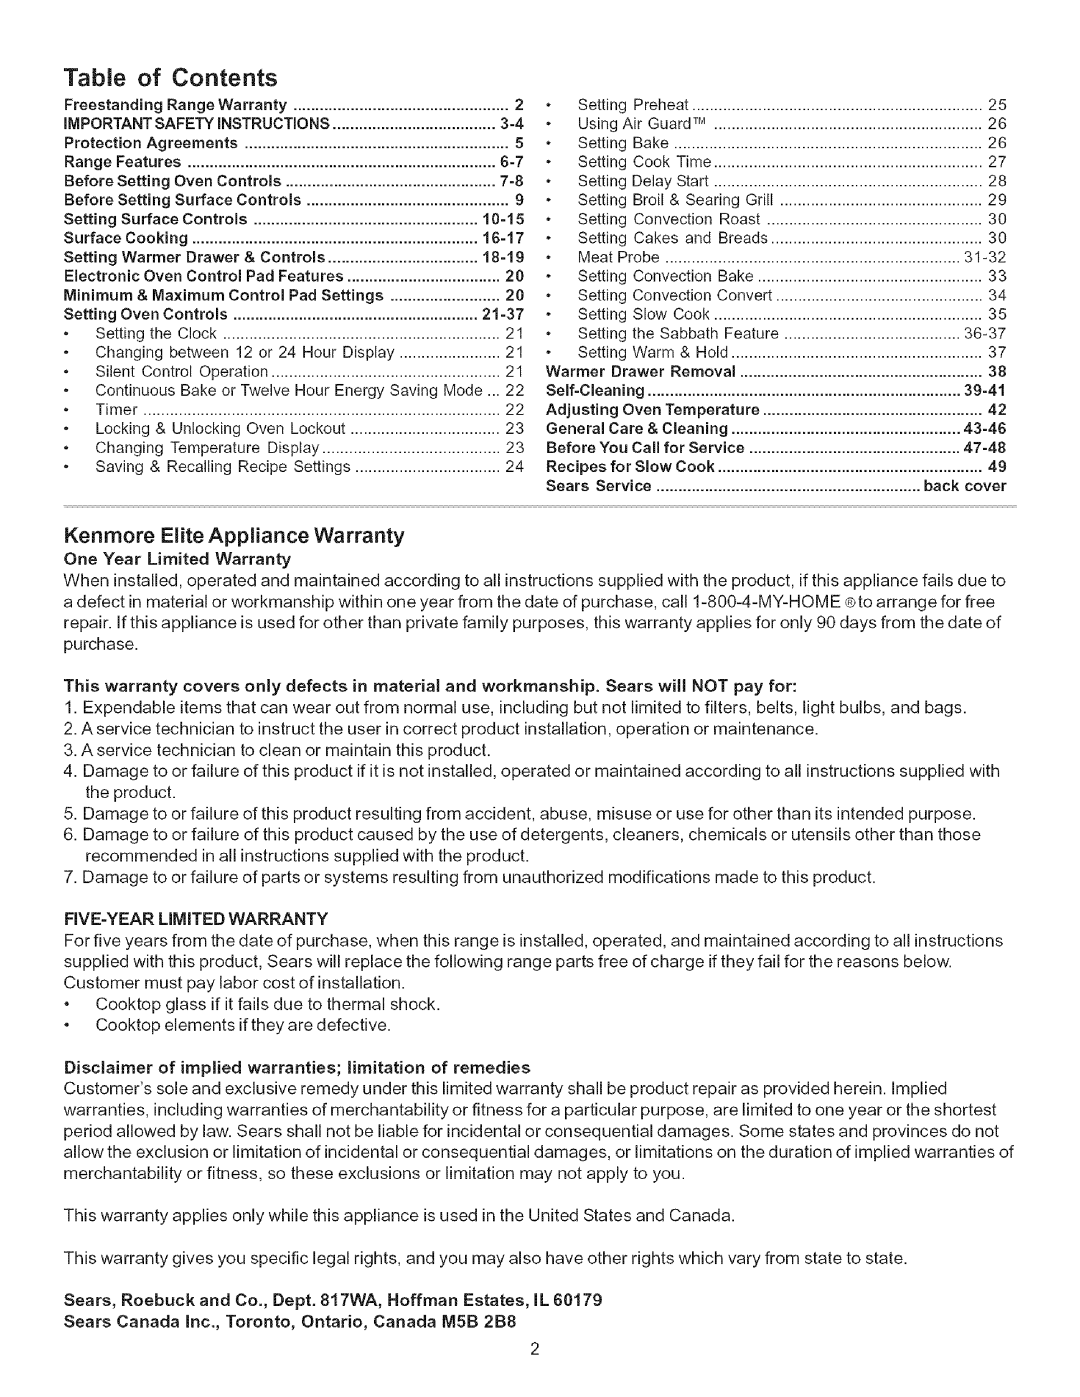 Kenmore 9664, 790-.9663 manual Table of Contents, Kenmore Elite Appliance Warranty 